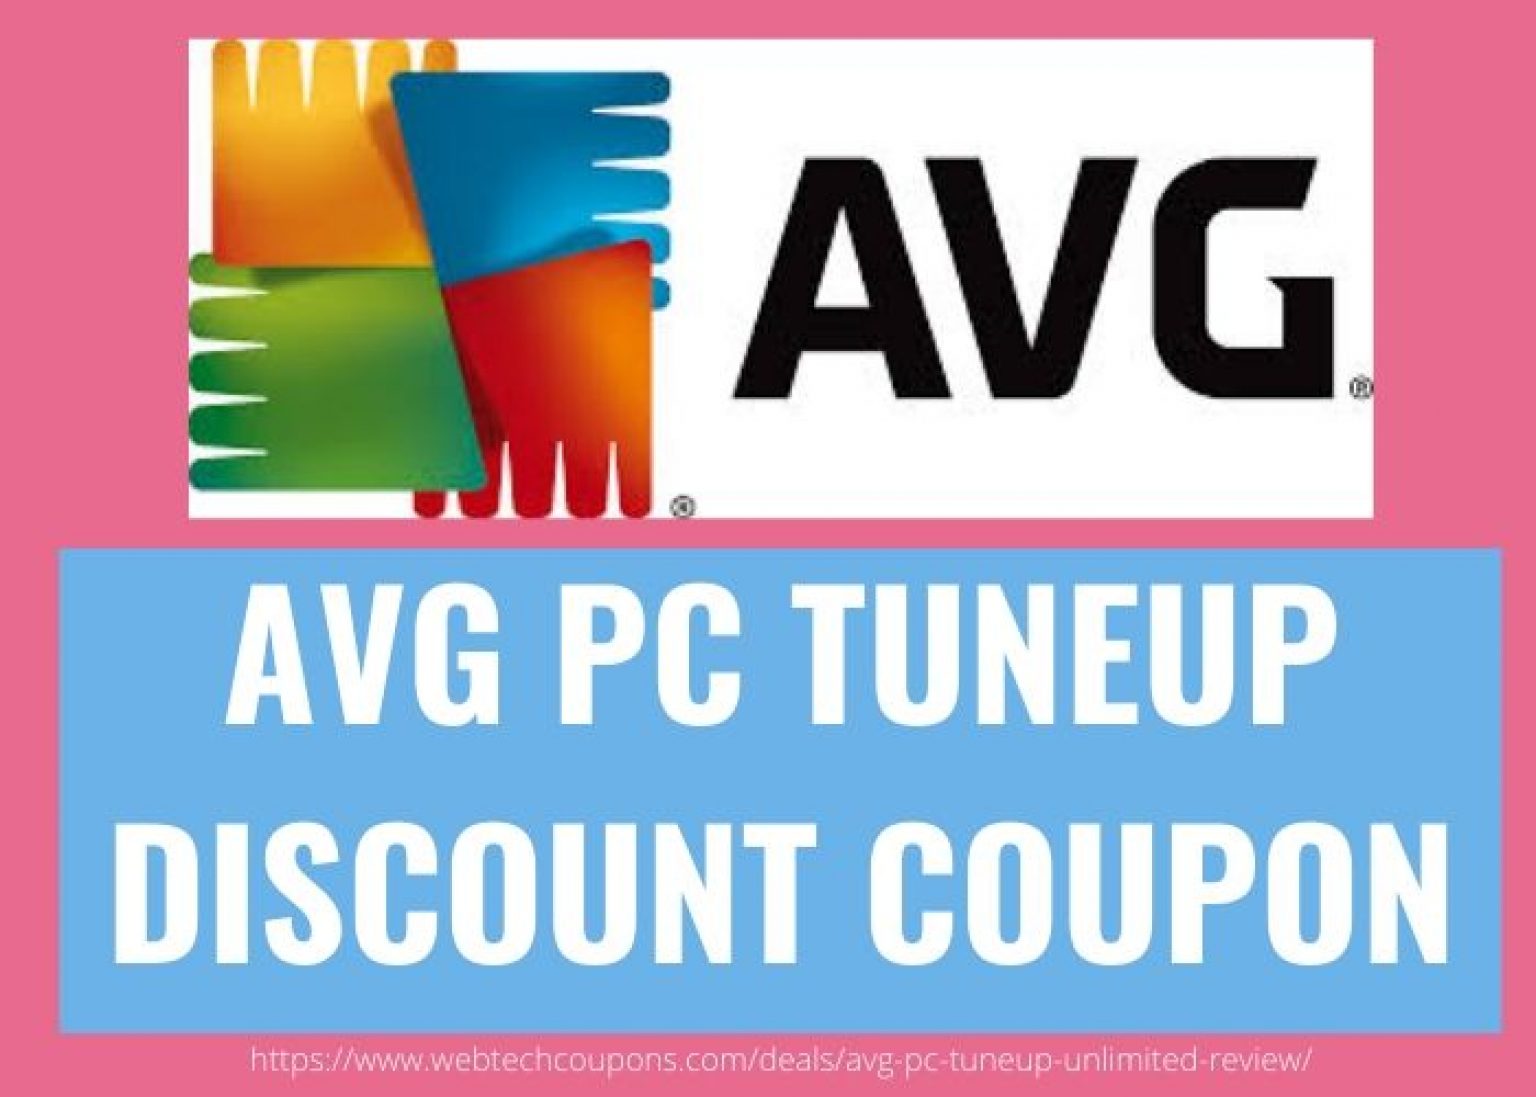 AVG PC TUNEUP DISCOUNT COUPON 1536x1097 